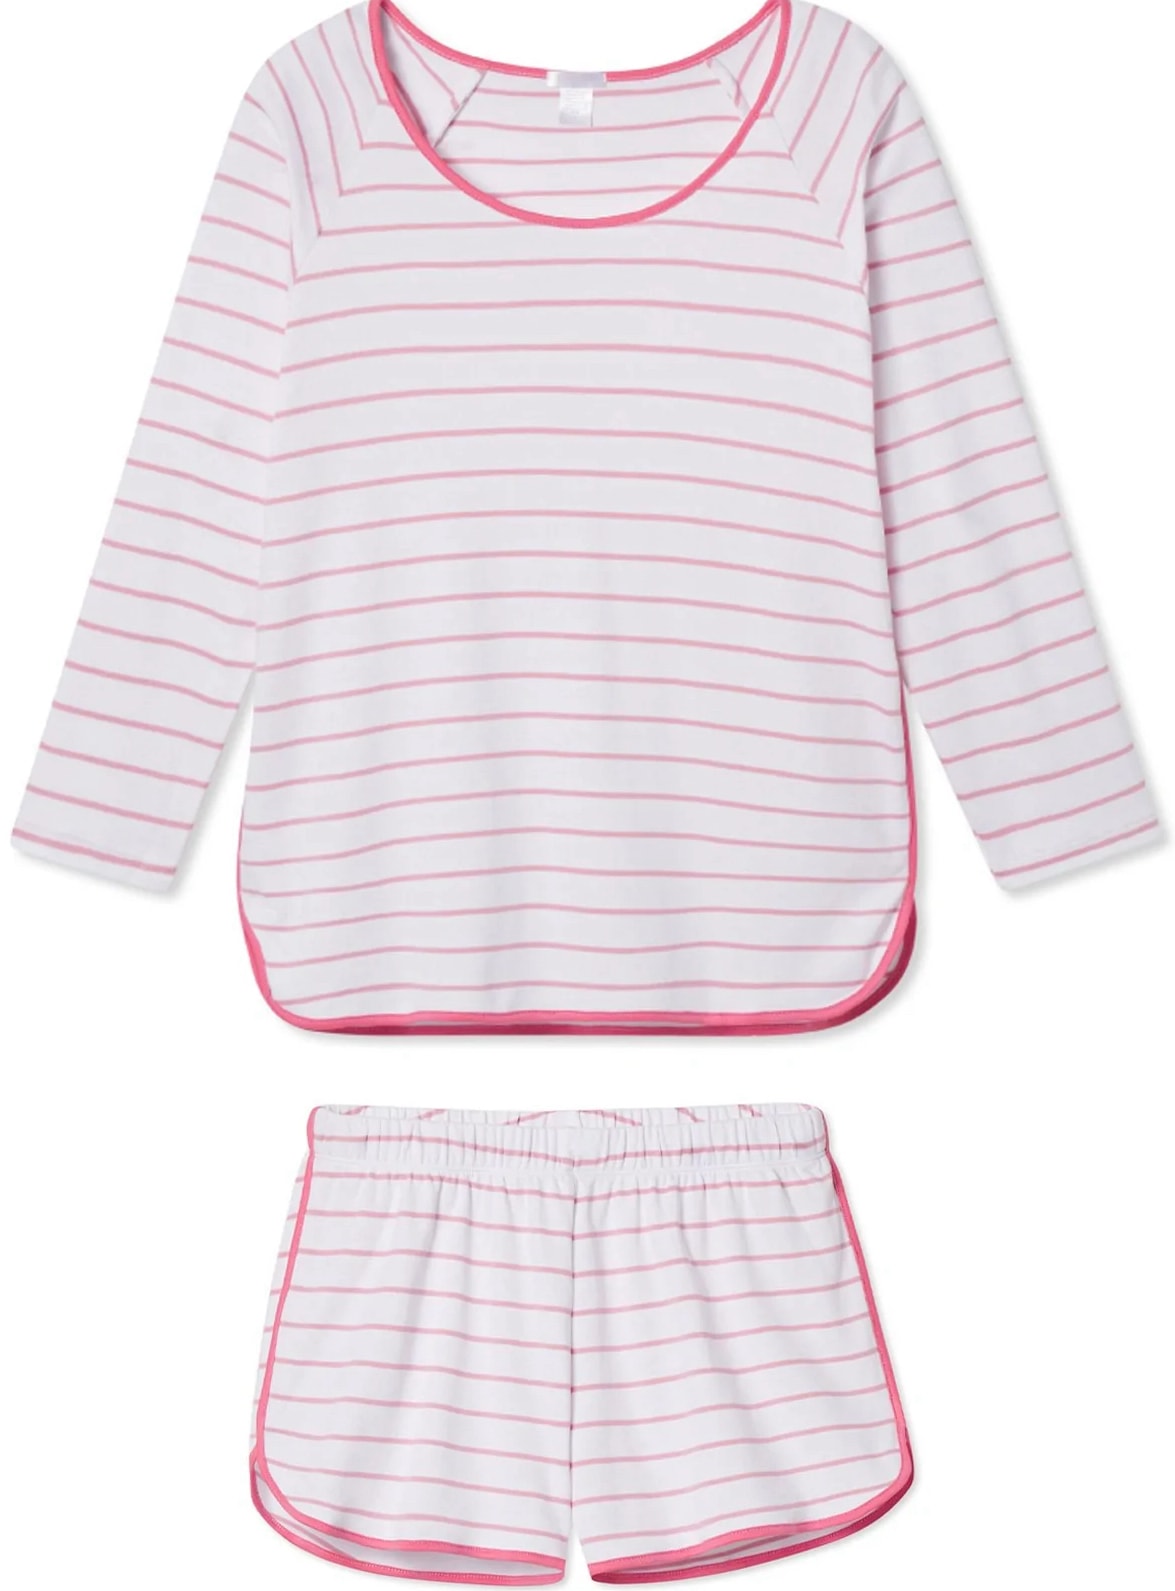 Pink striped matching pajama shorts and long sleeve top 